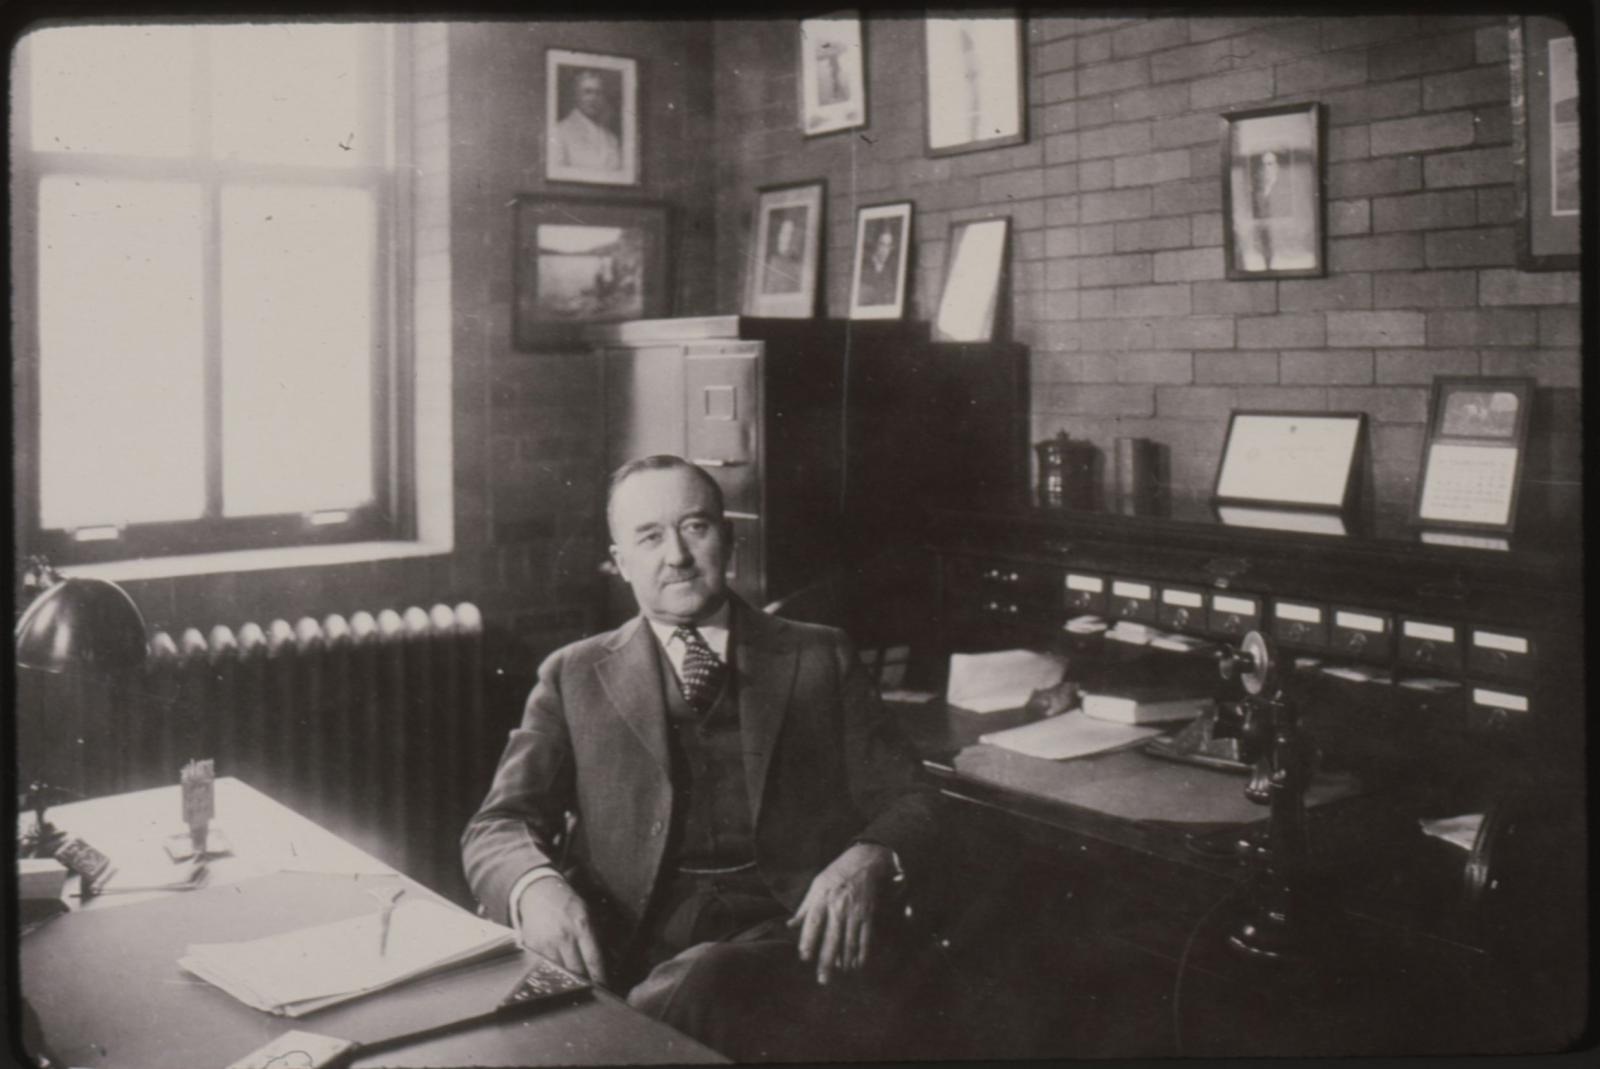 Underwriters Laboratories founder William Henry Merrill Jr. in 1923